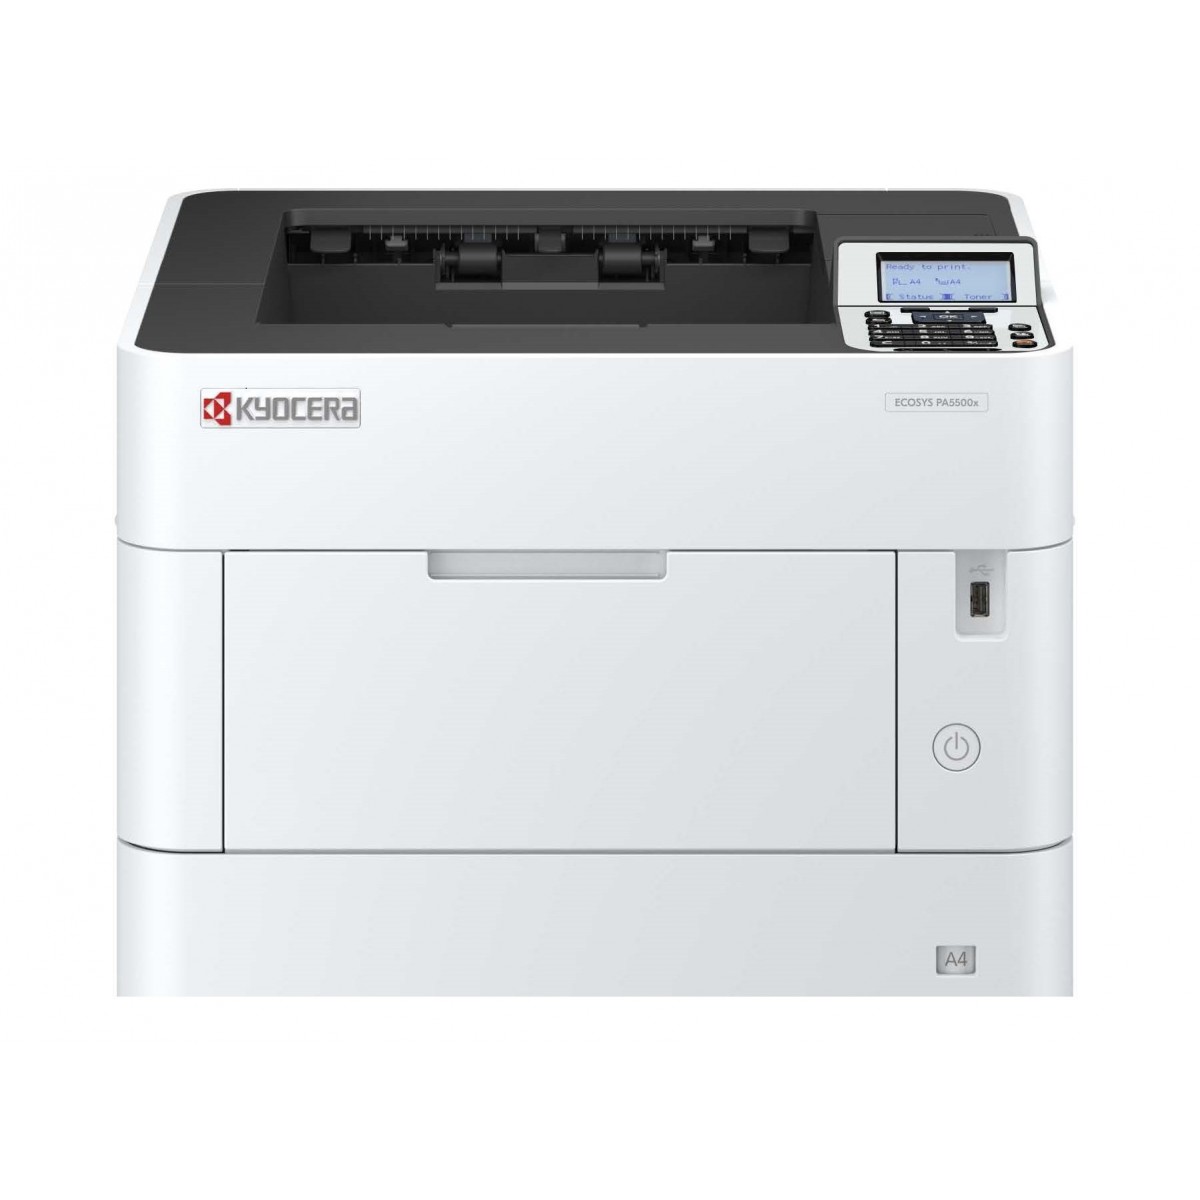 Kyocera Ecosys PA5500x Laserdrucker inkl. 3 Jahre Vor-Ort Garantie - Laser-Led - 512 MB